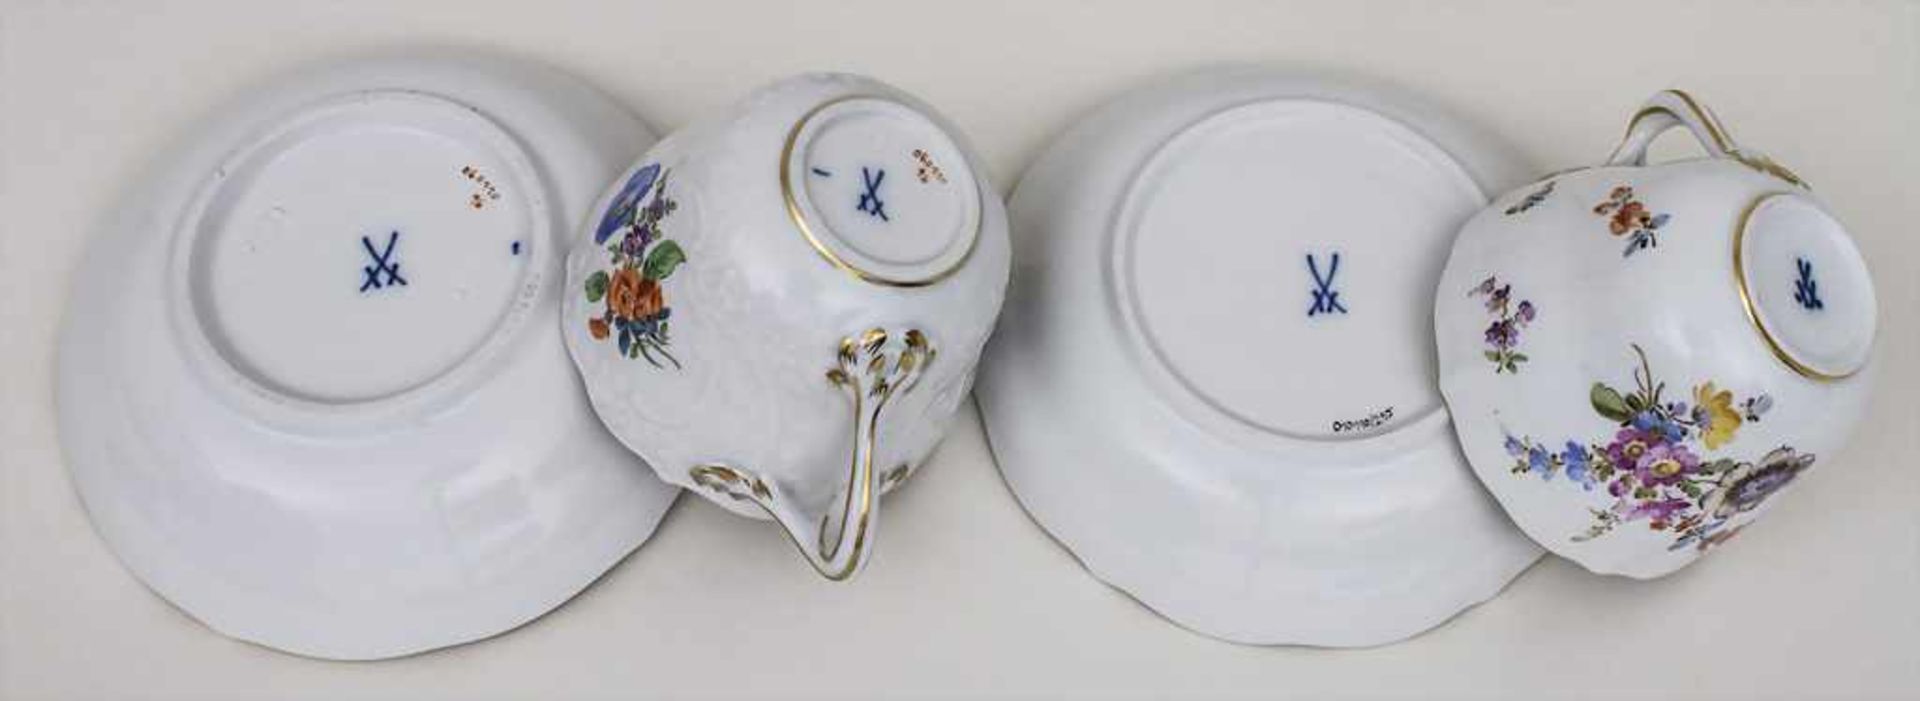 Vierteiliges Konvolut Porzellane mit Blumenmalerei / A 4 piece set of porcelain with flowers, - Image 2 of 3